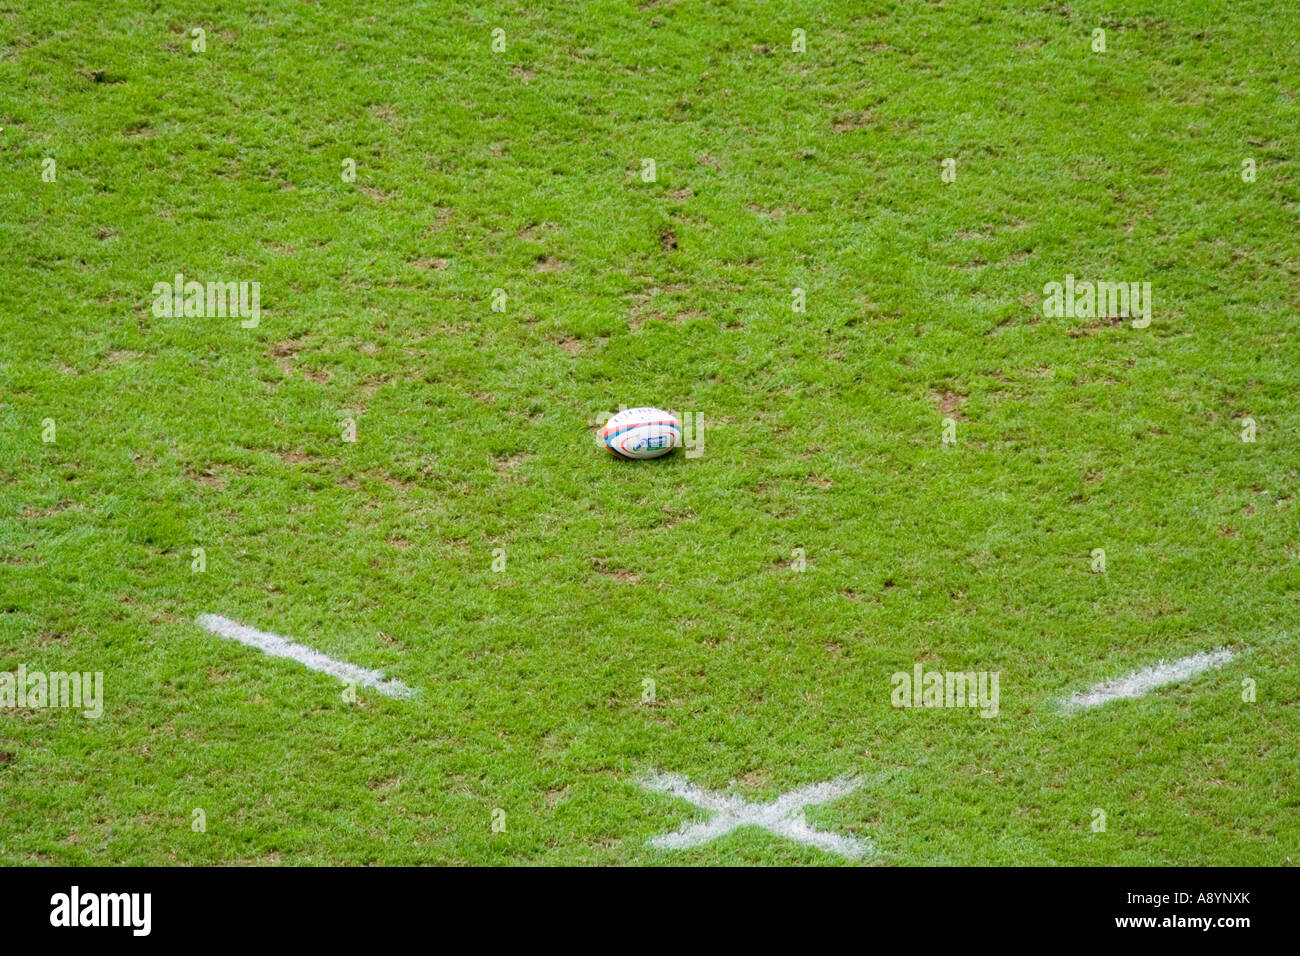 Allein auf dem Feld Hong Kong Sevens 2007 Rugby-Fußball Stockfoto